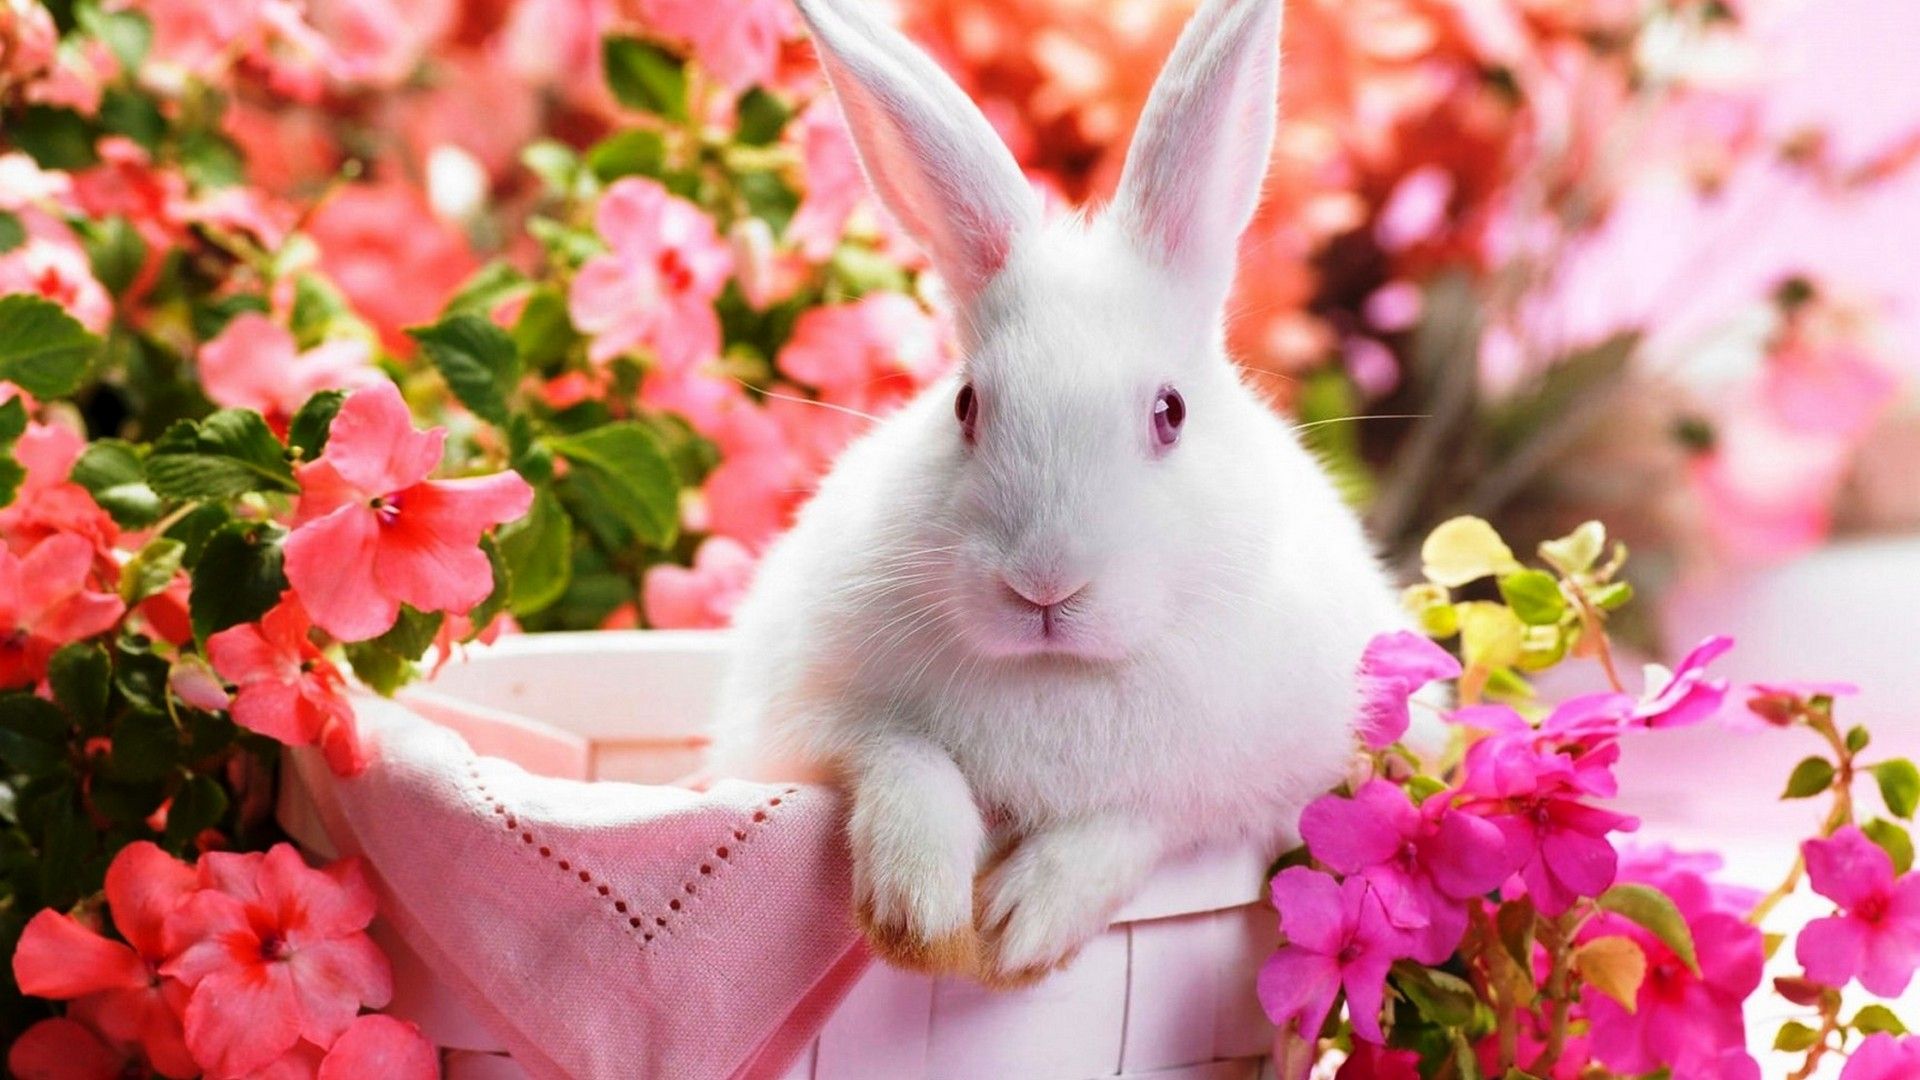 Cute Rabbit Wallpaper HD Best Wallpapercute